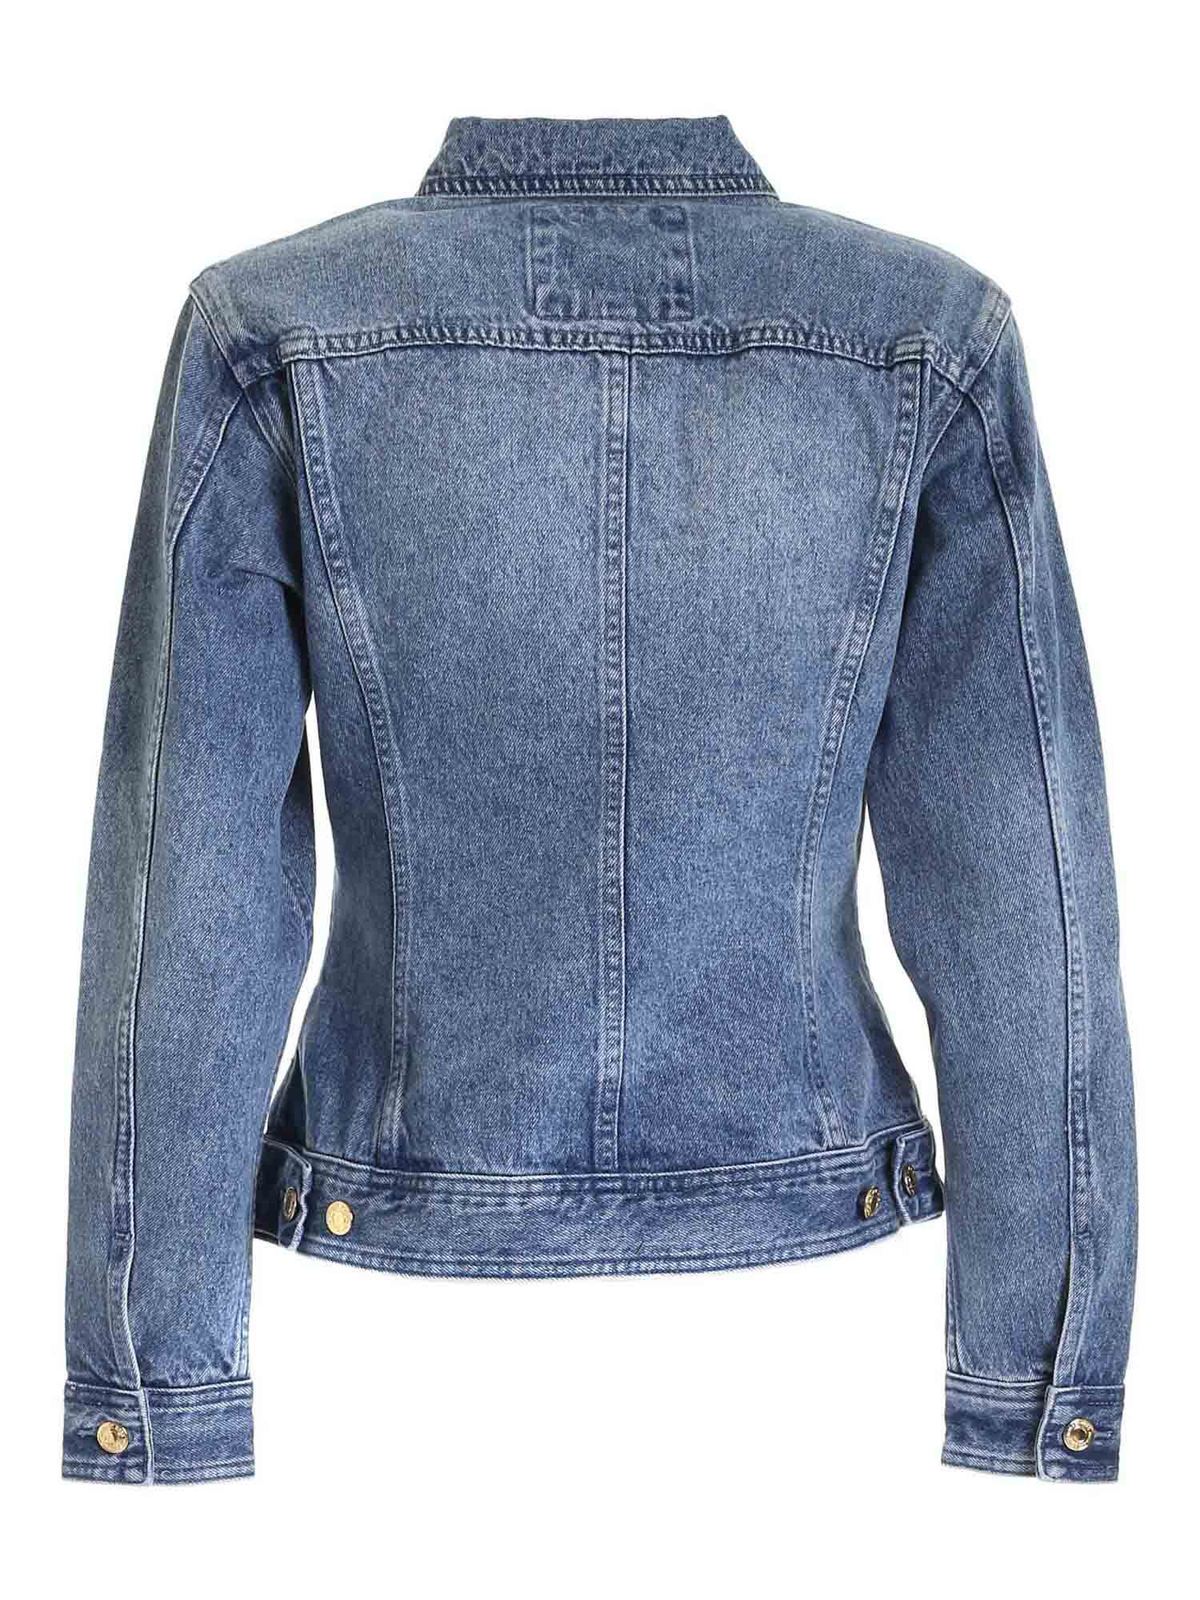 michael kors blue jean jacket